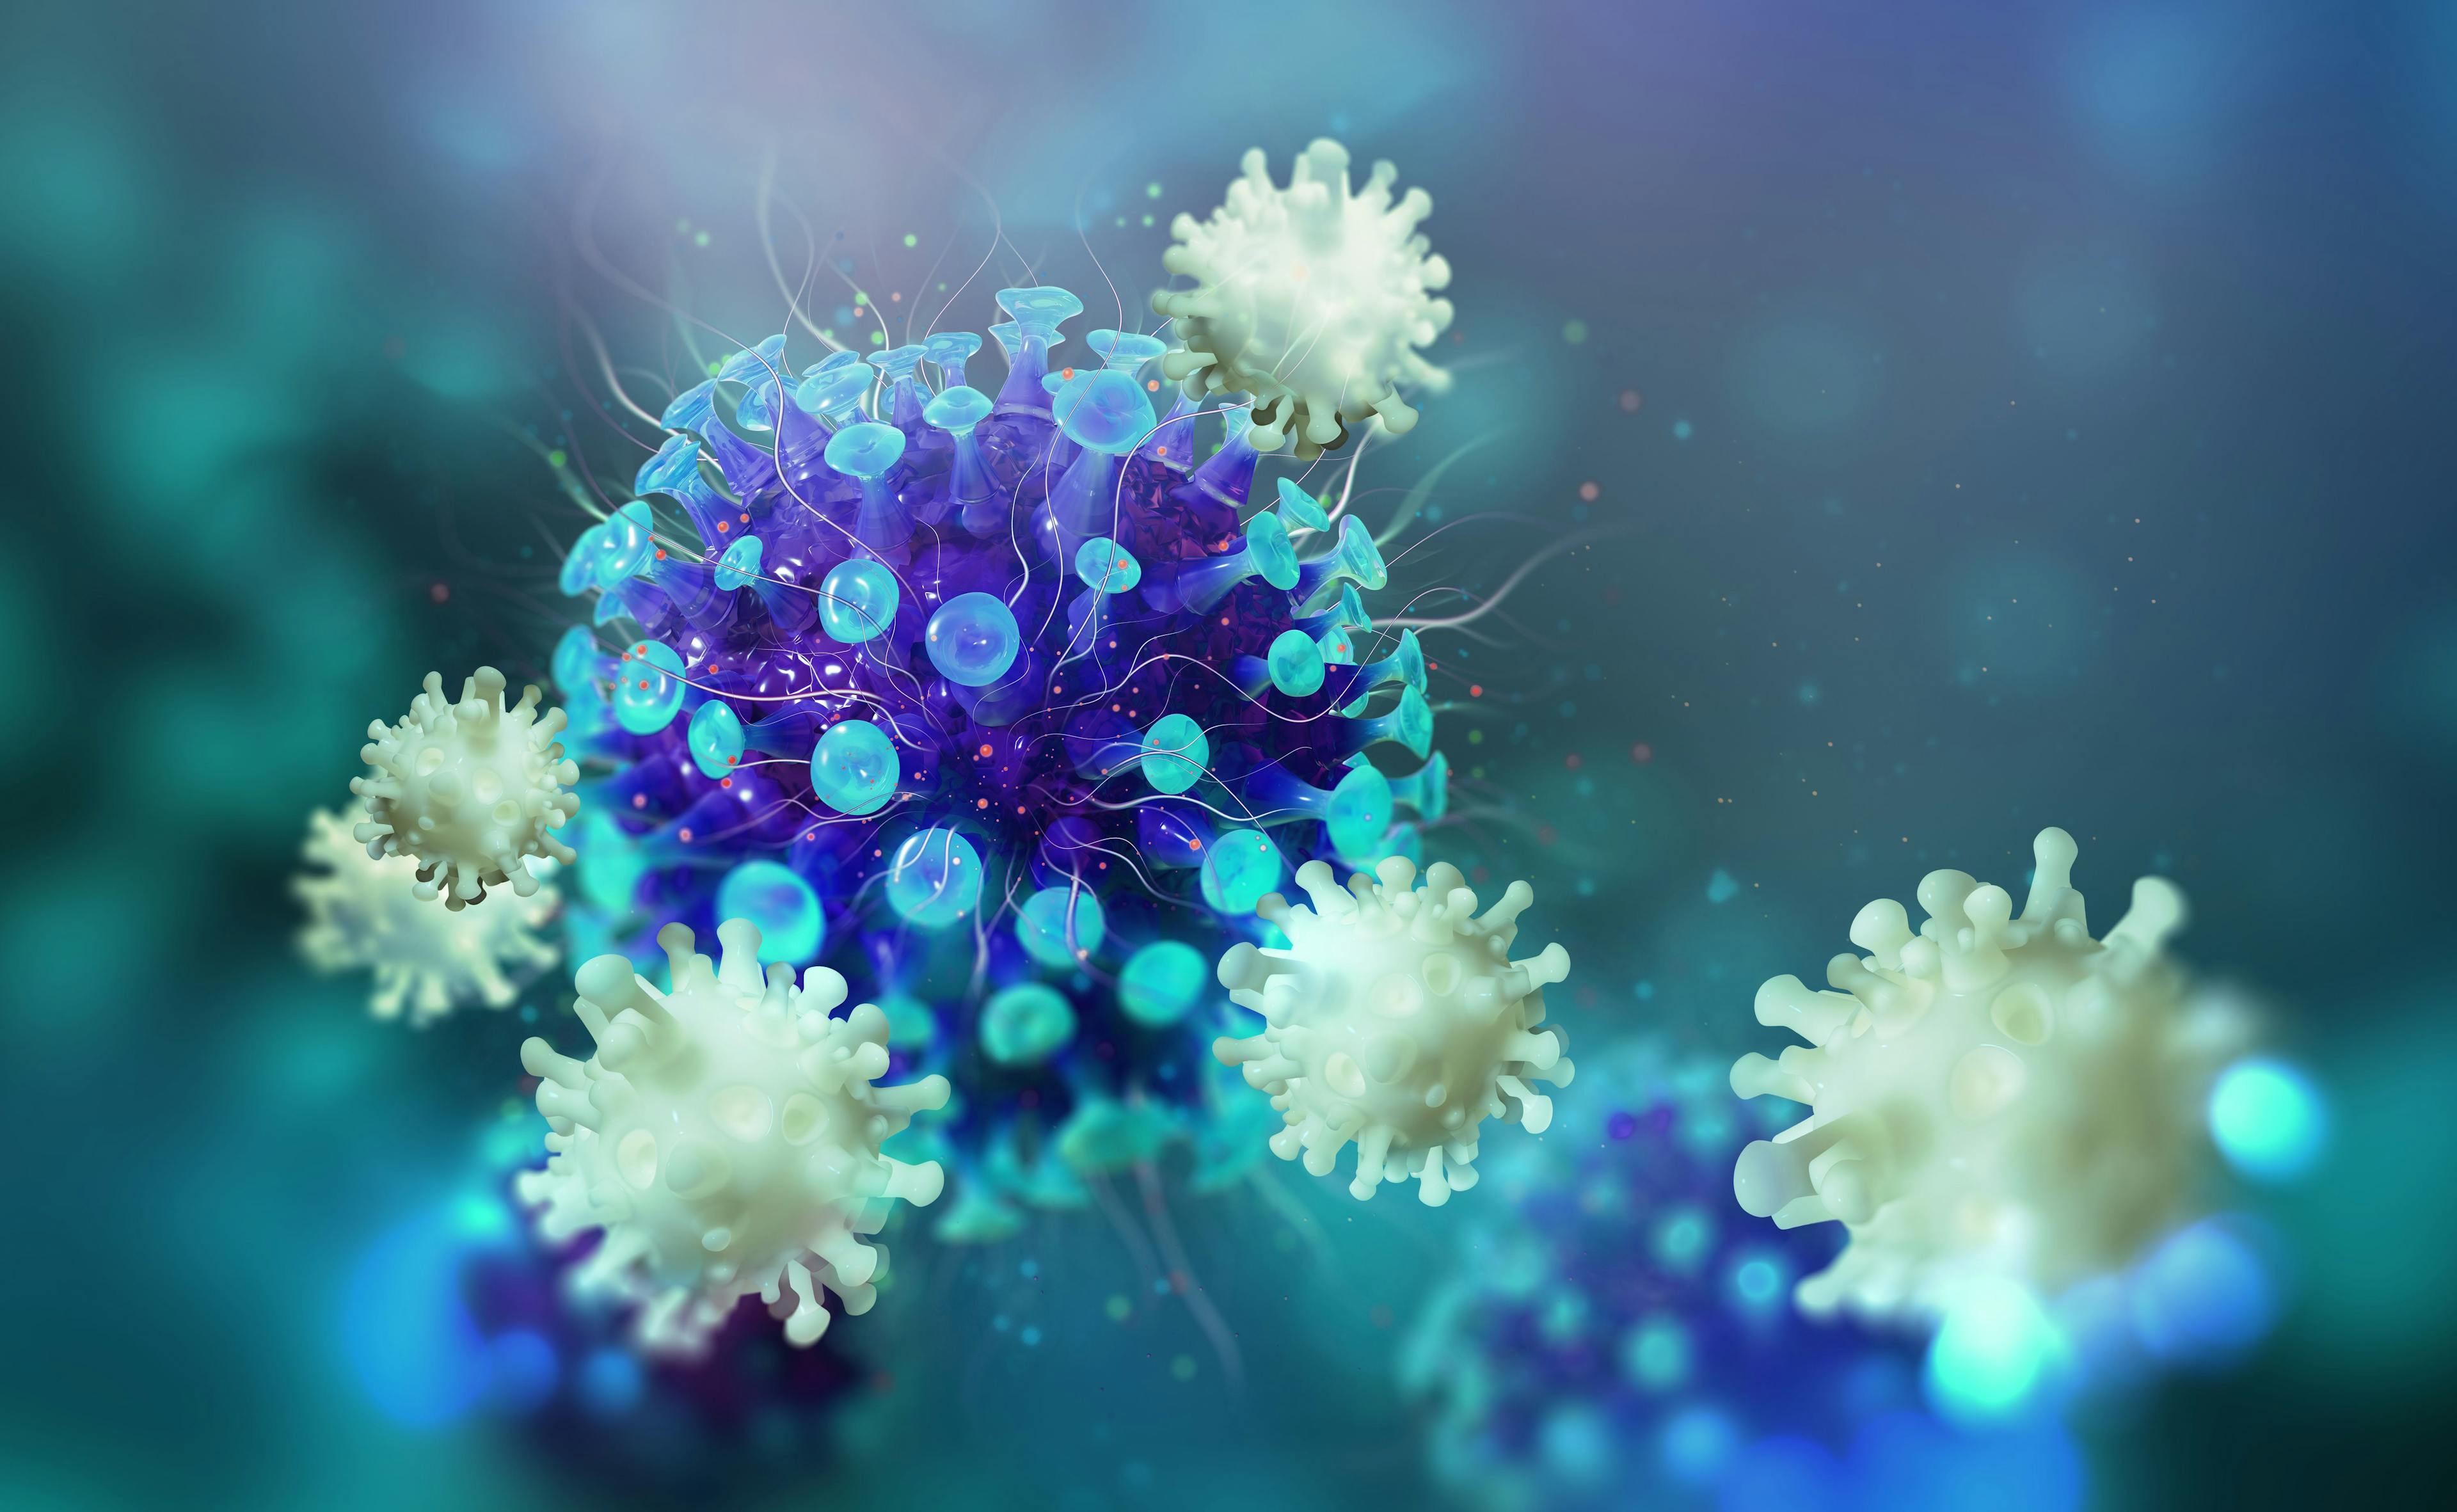 Immune Cells Fighting Disease Concept | image credit: Siarhei - stock.adobe.com